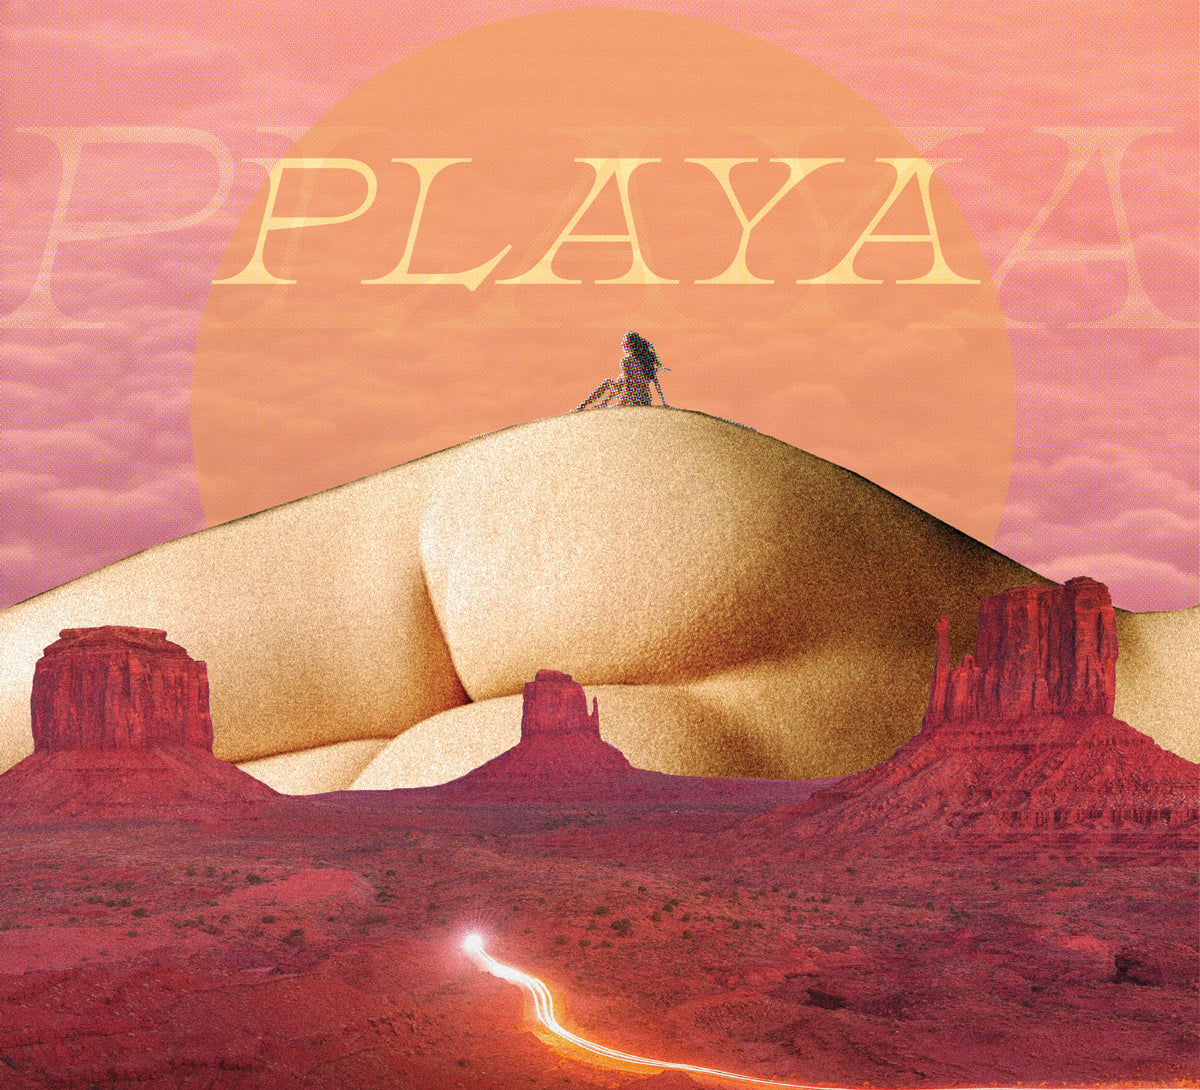 Playlist: Playa